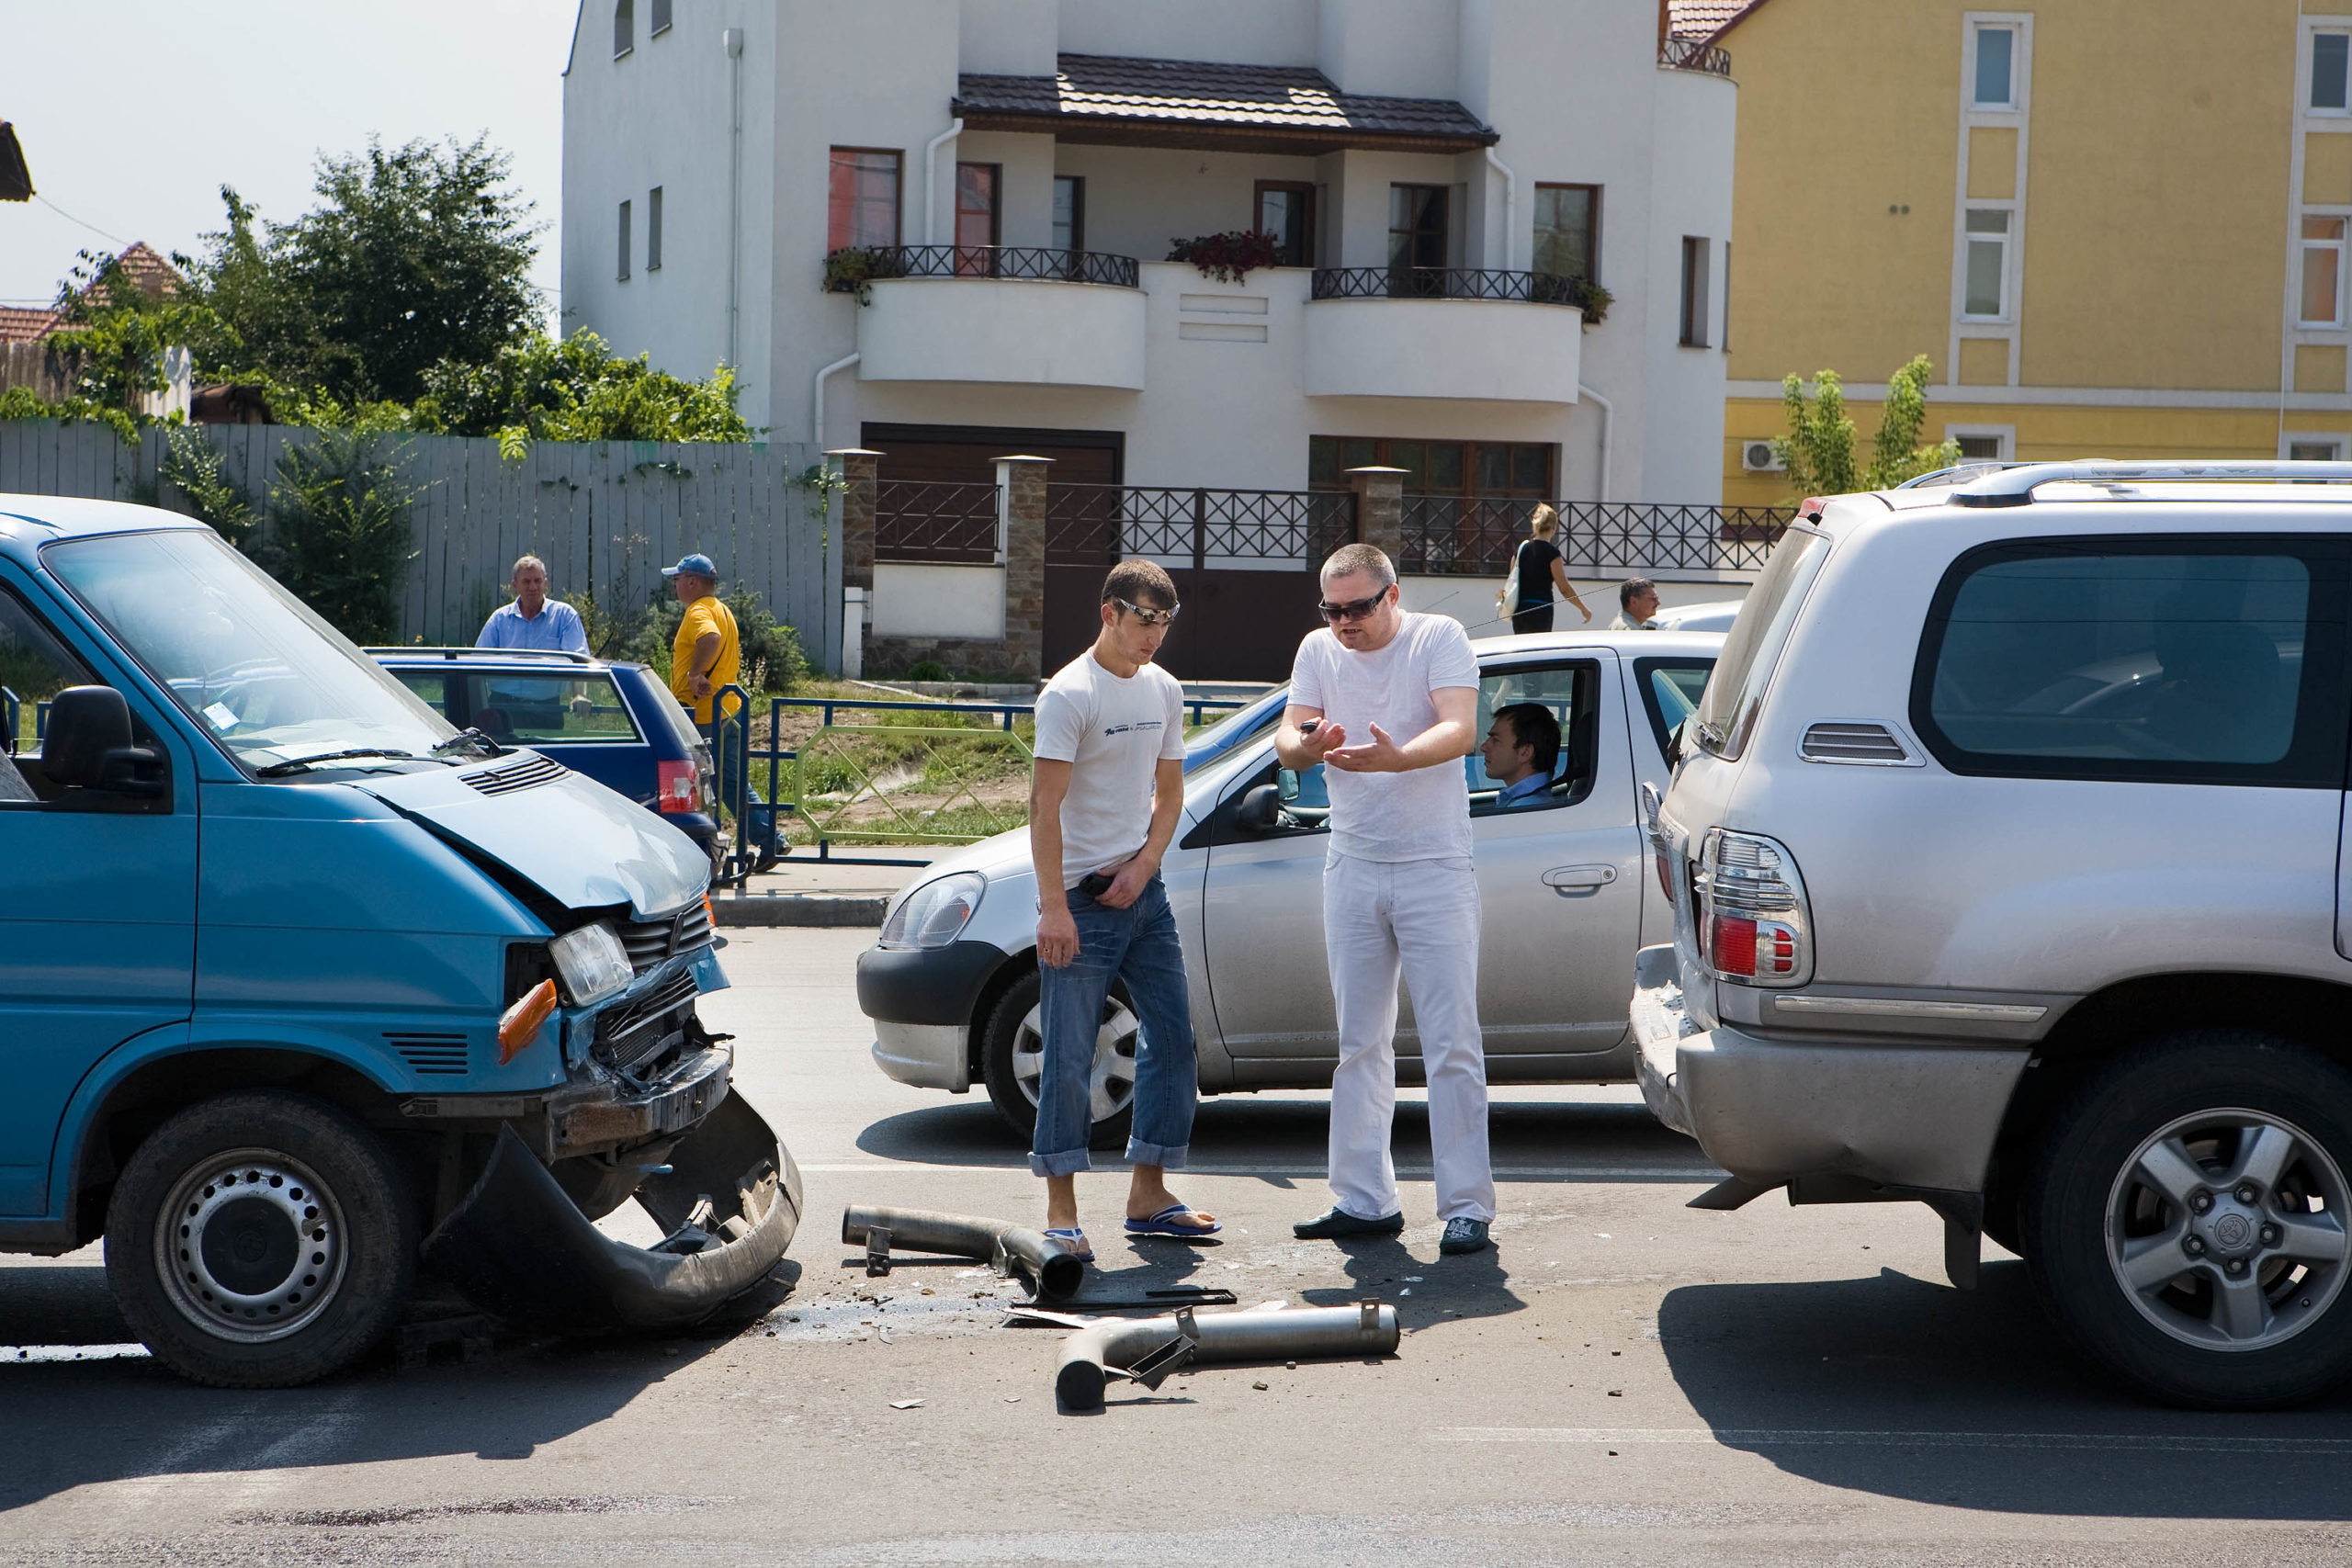 Crash #2, Volkswagen versus Toyota; Chisinau, Moldova